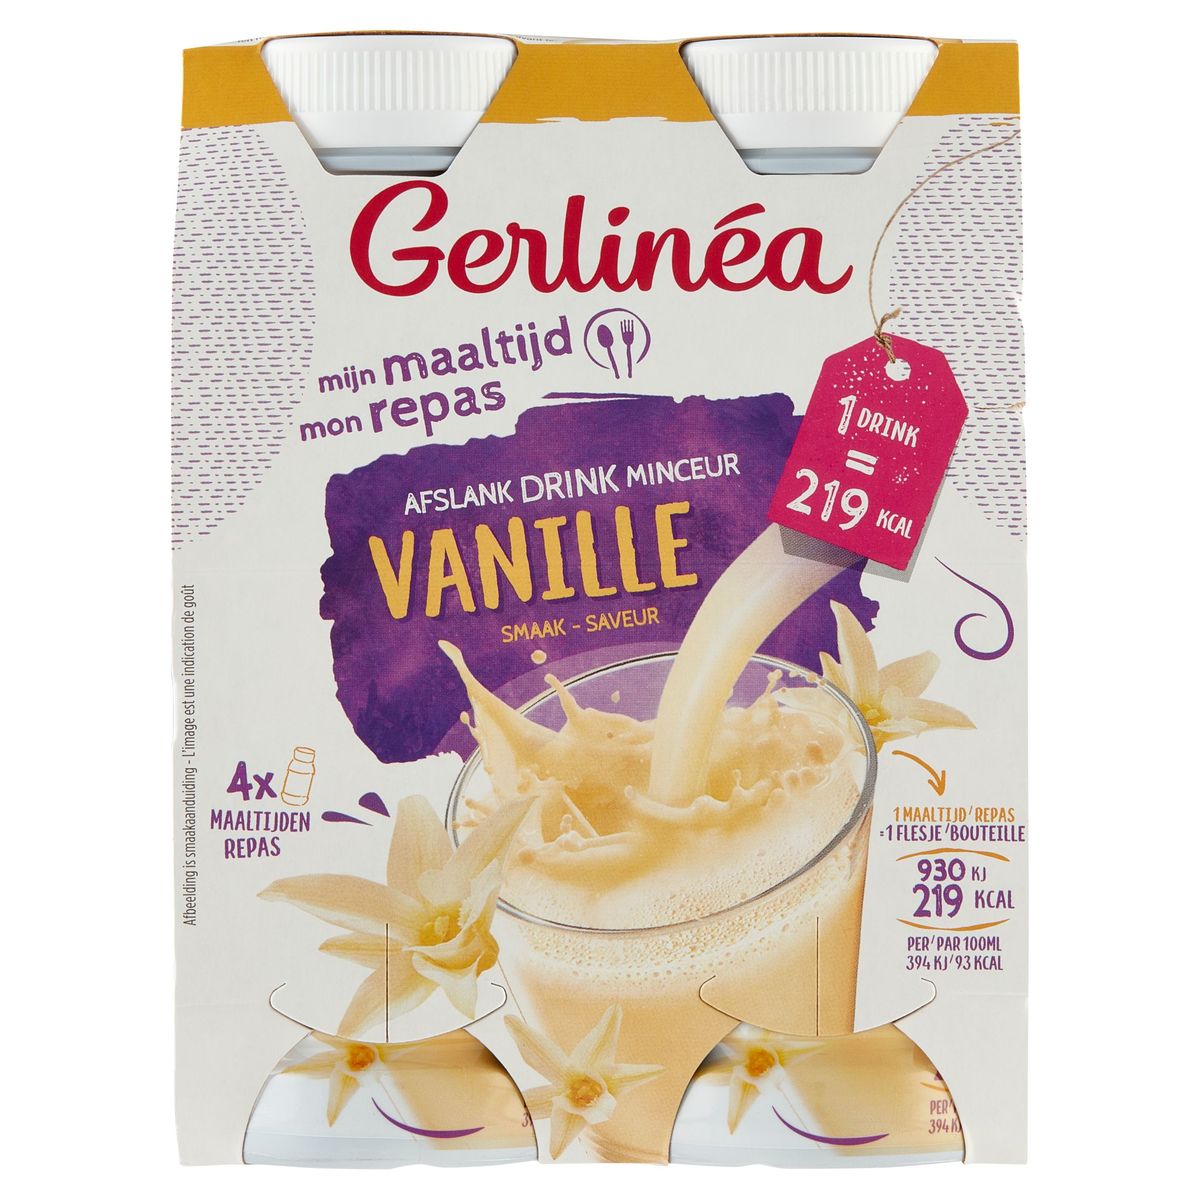 ② Gerlinéa milkshake repas minceur saveur vanille — Produits